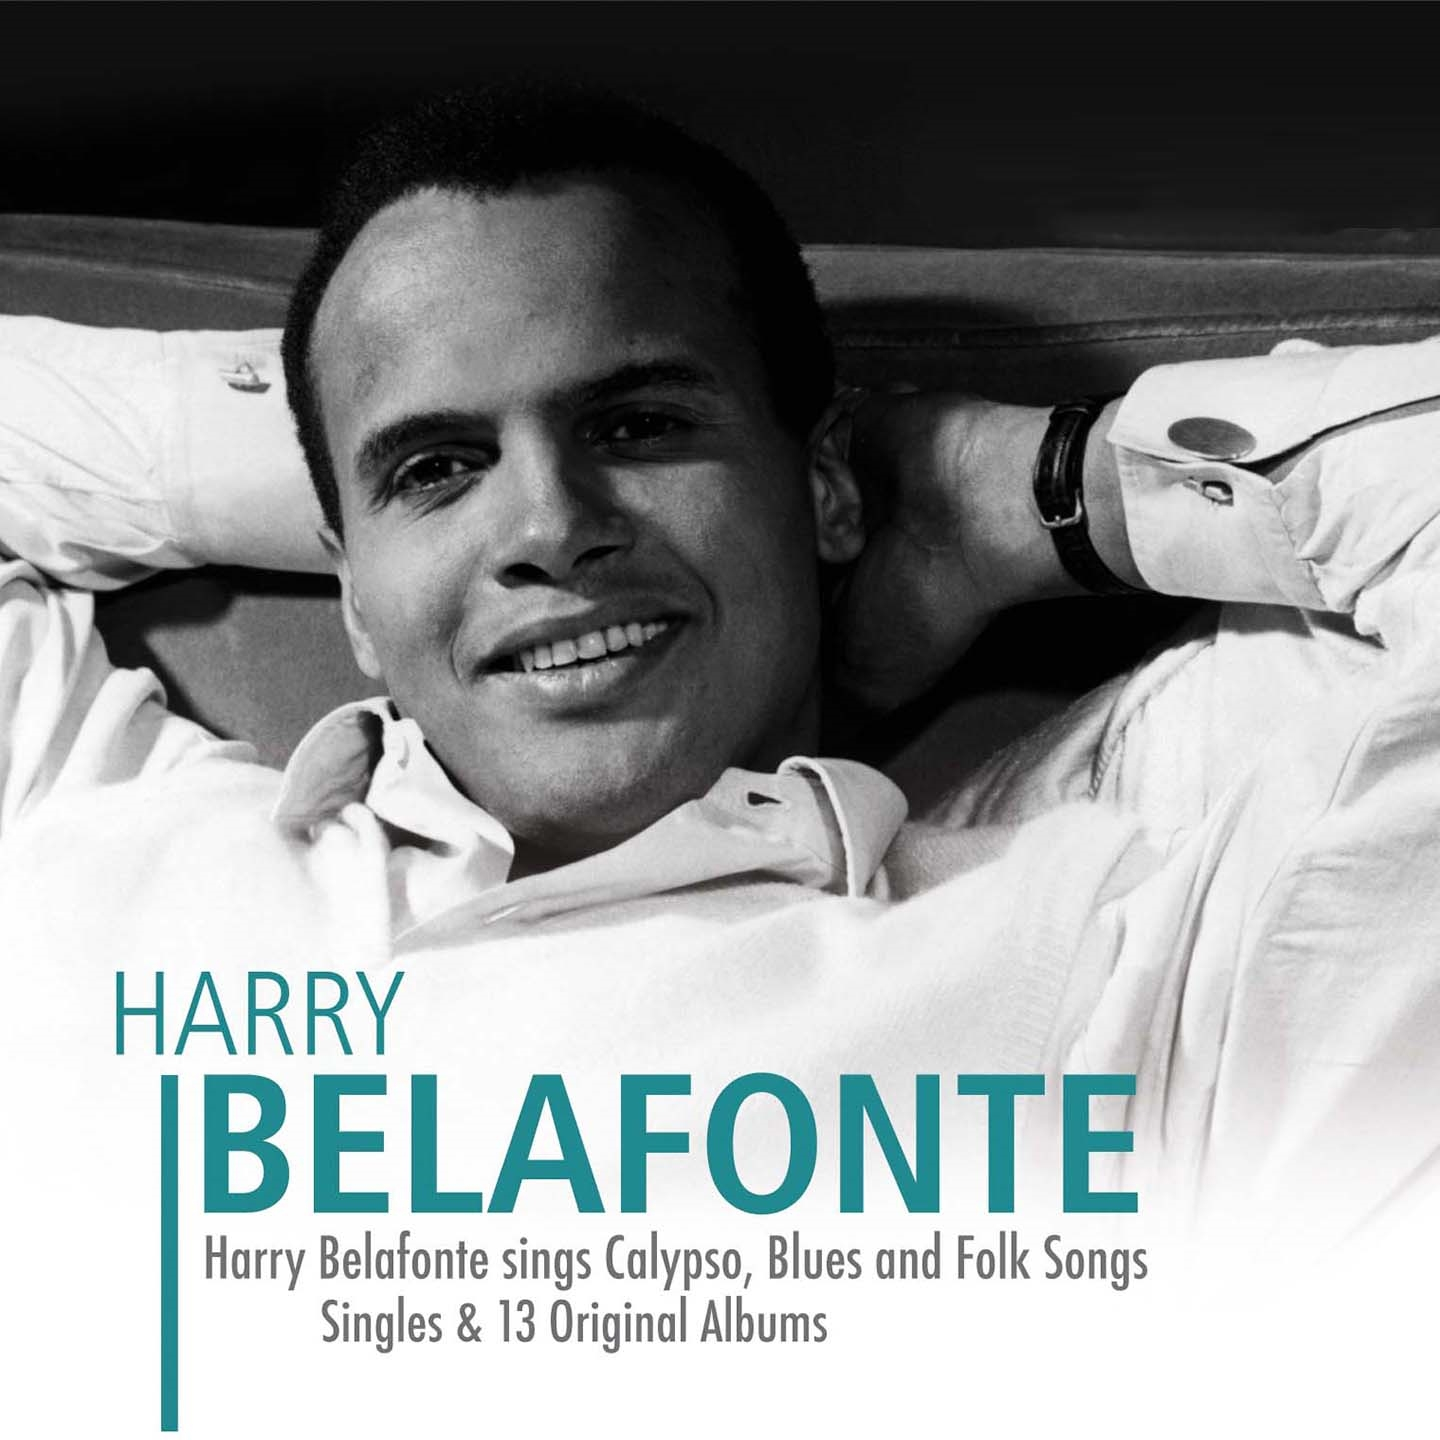 HARRY BELAFONTE SINGS CALYPSO, BLUES AND FOLK SONGS